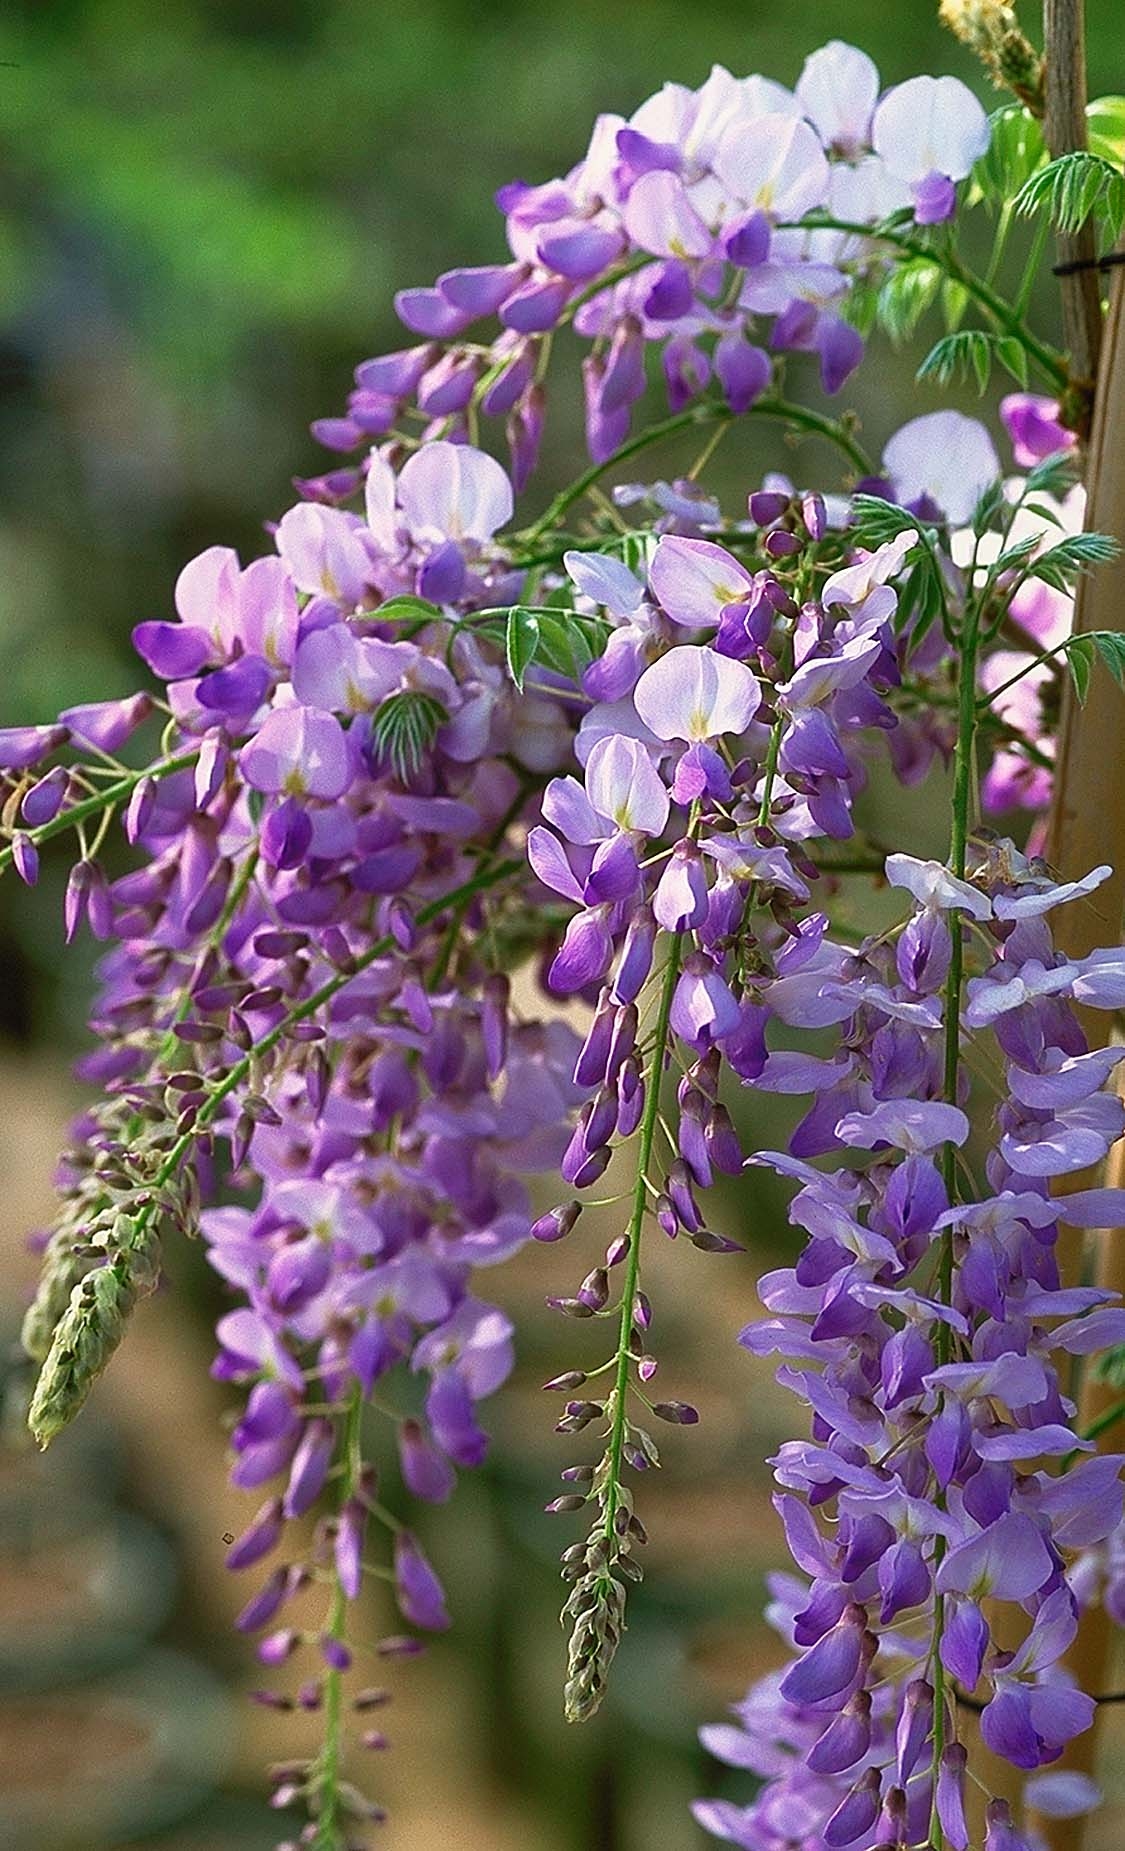 https://plants4home.com/wp-content/uploads/2021/12/wisteria_texas_purple.jpg